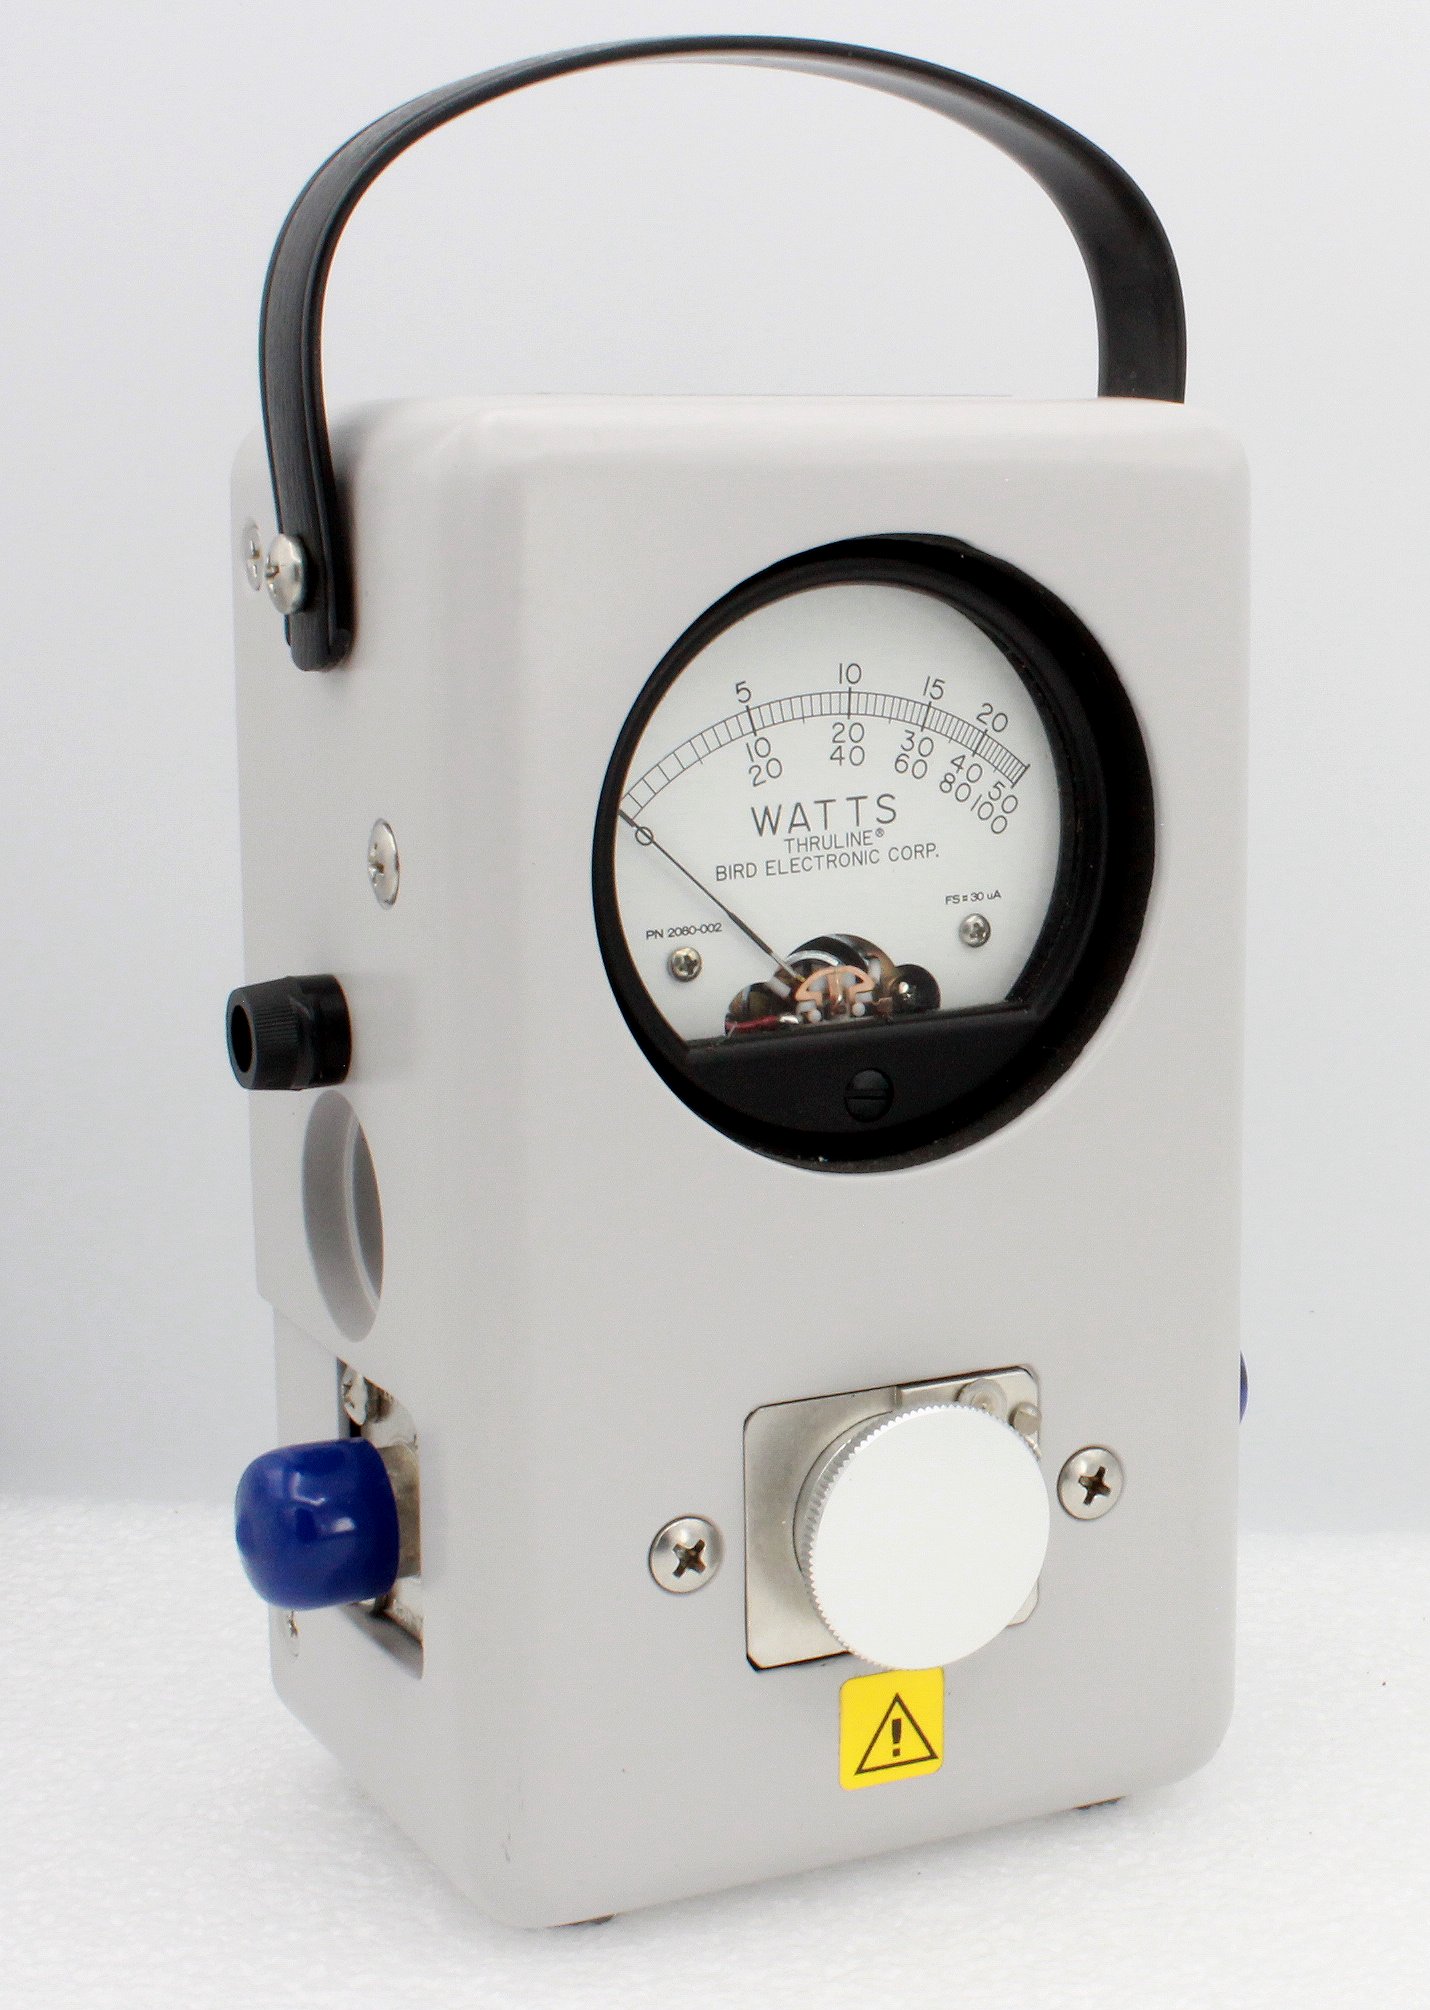 Bird 43 Thruline RF Wattmeter (Used) In New Condition #143400499 Bird 43 Wattmeter Used